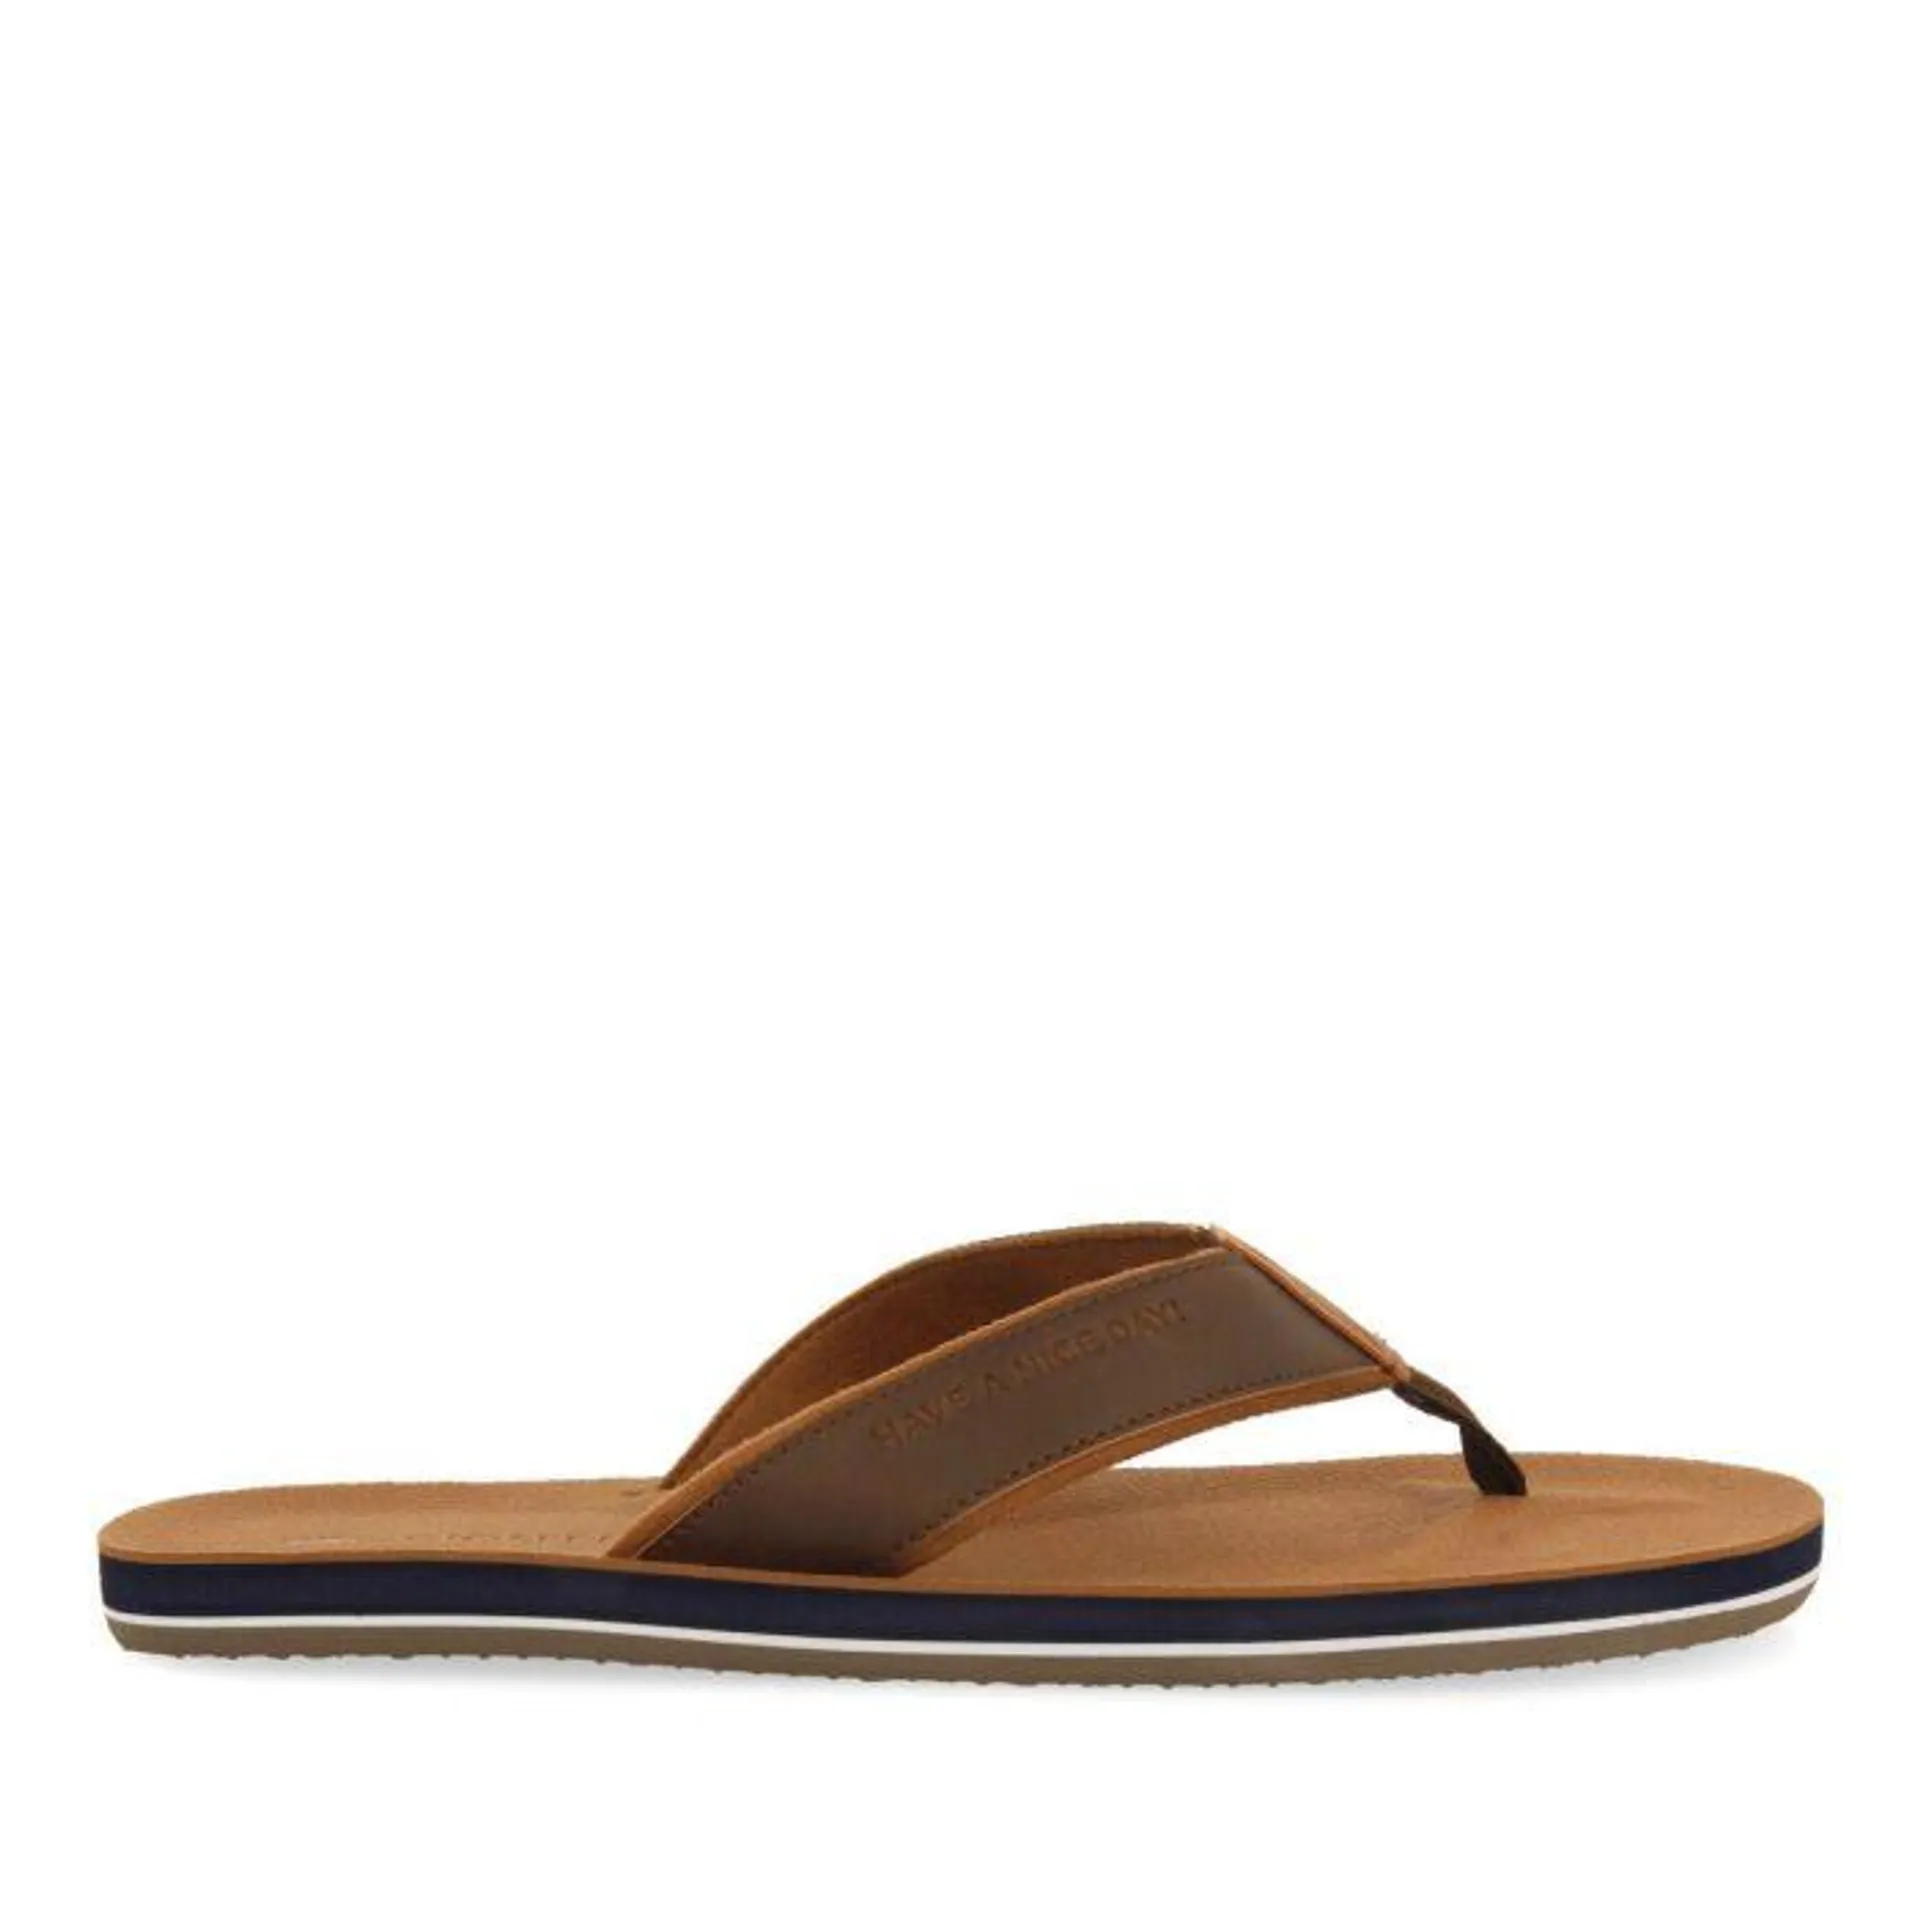 Thelus men's brown sandals